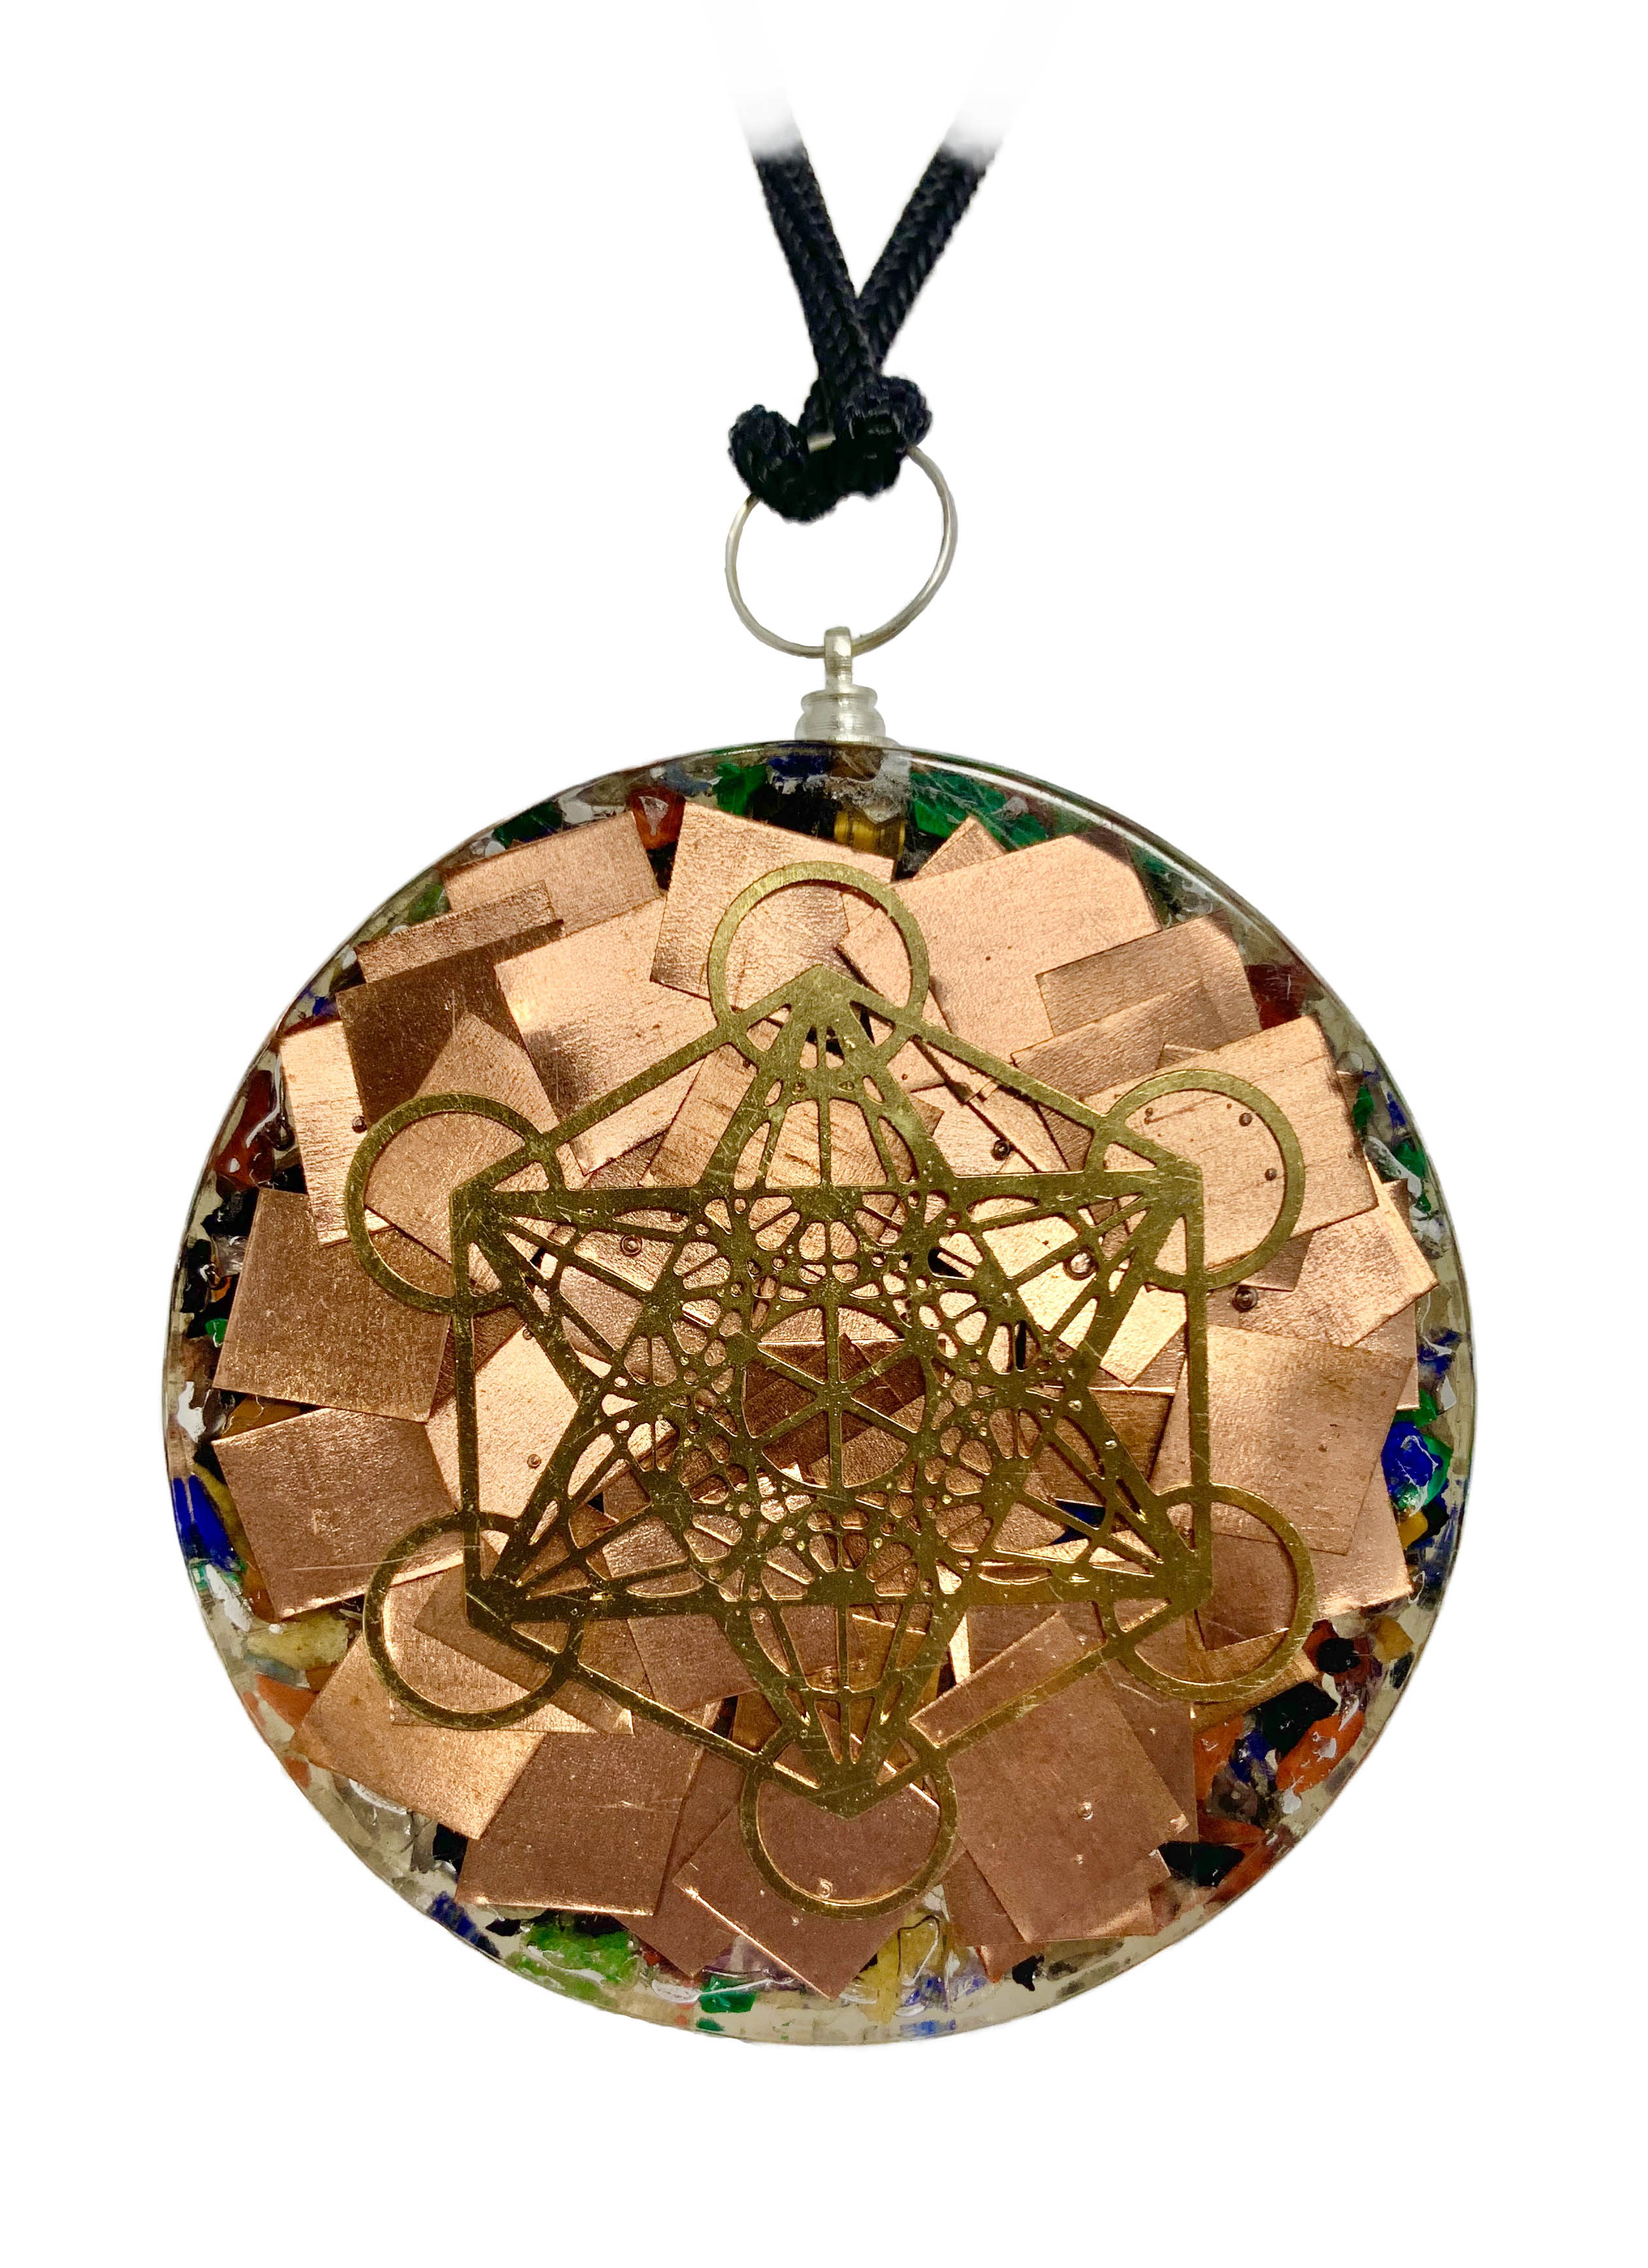 Copper Plate Metatron Cube Sacred Geometry Pendant